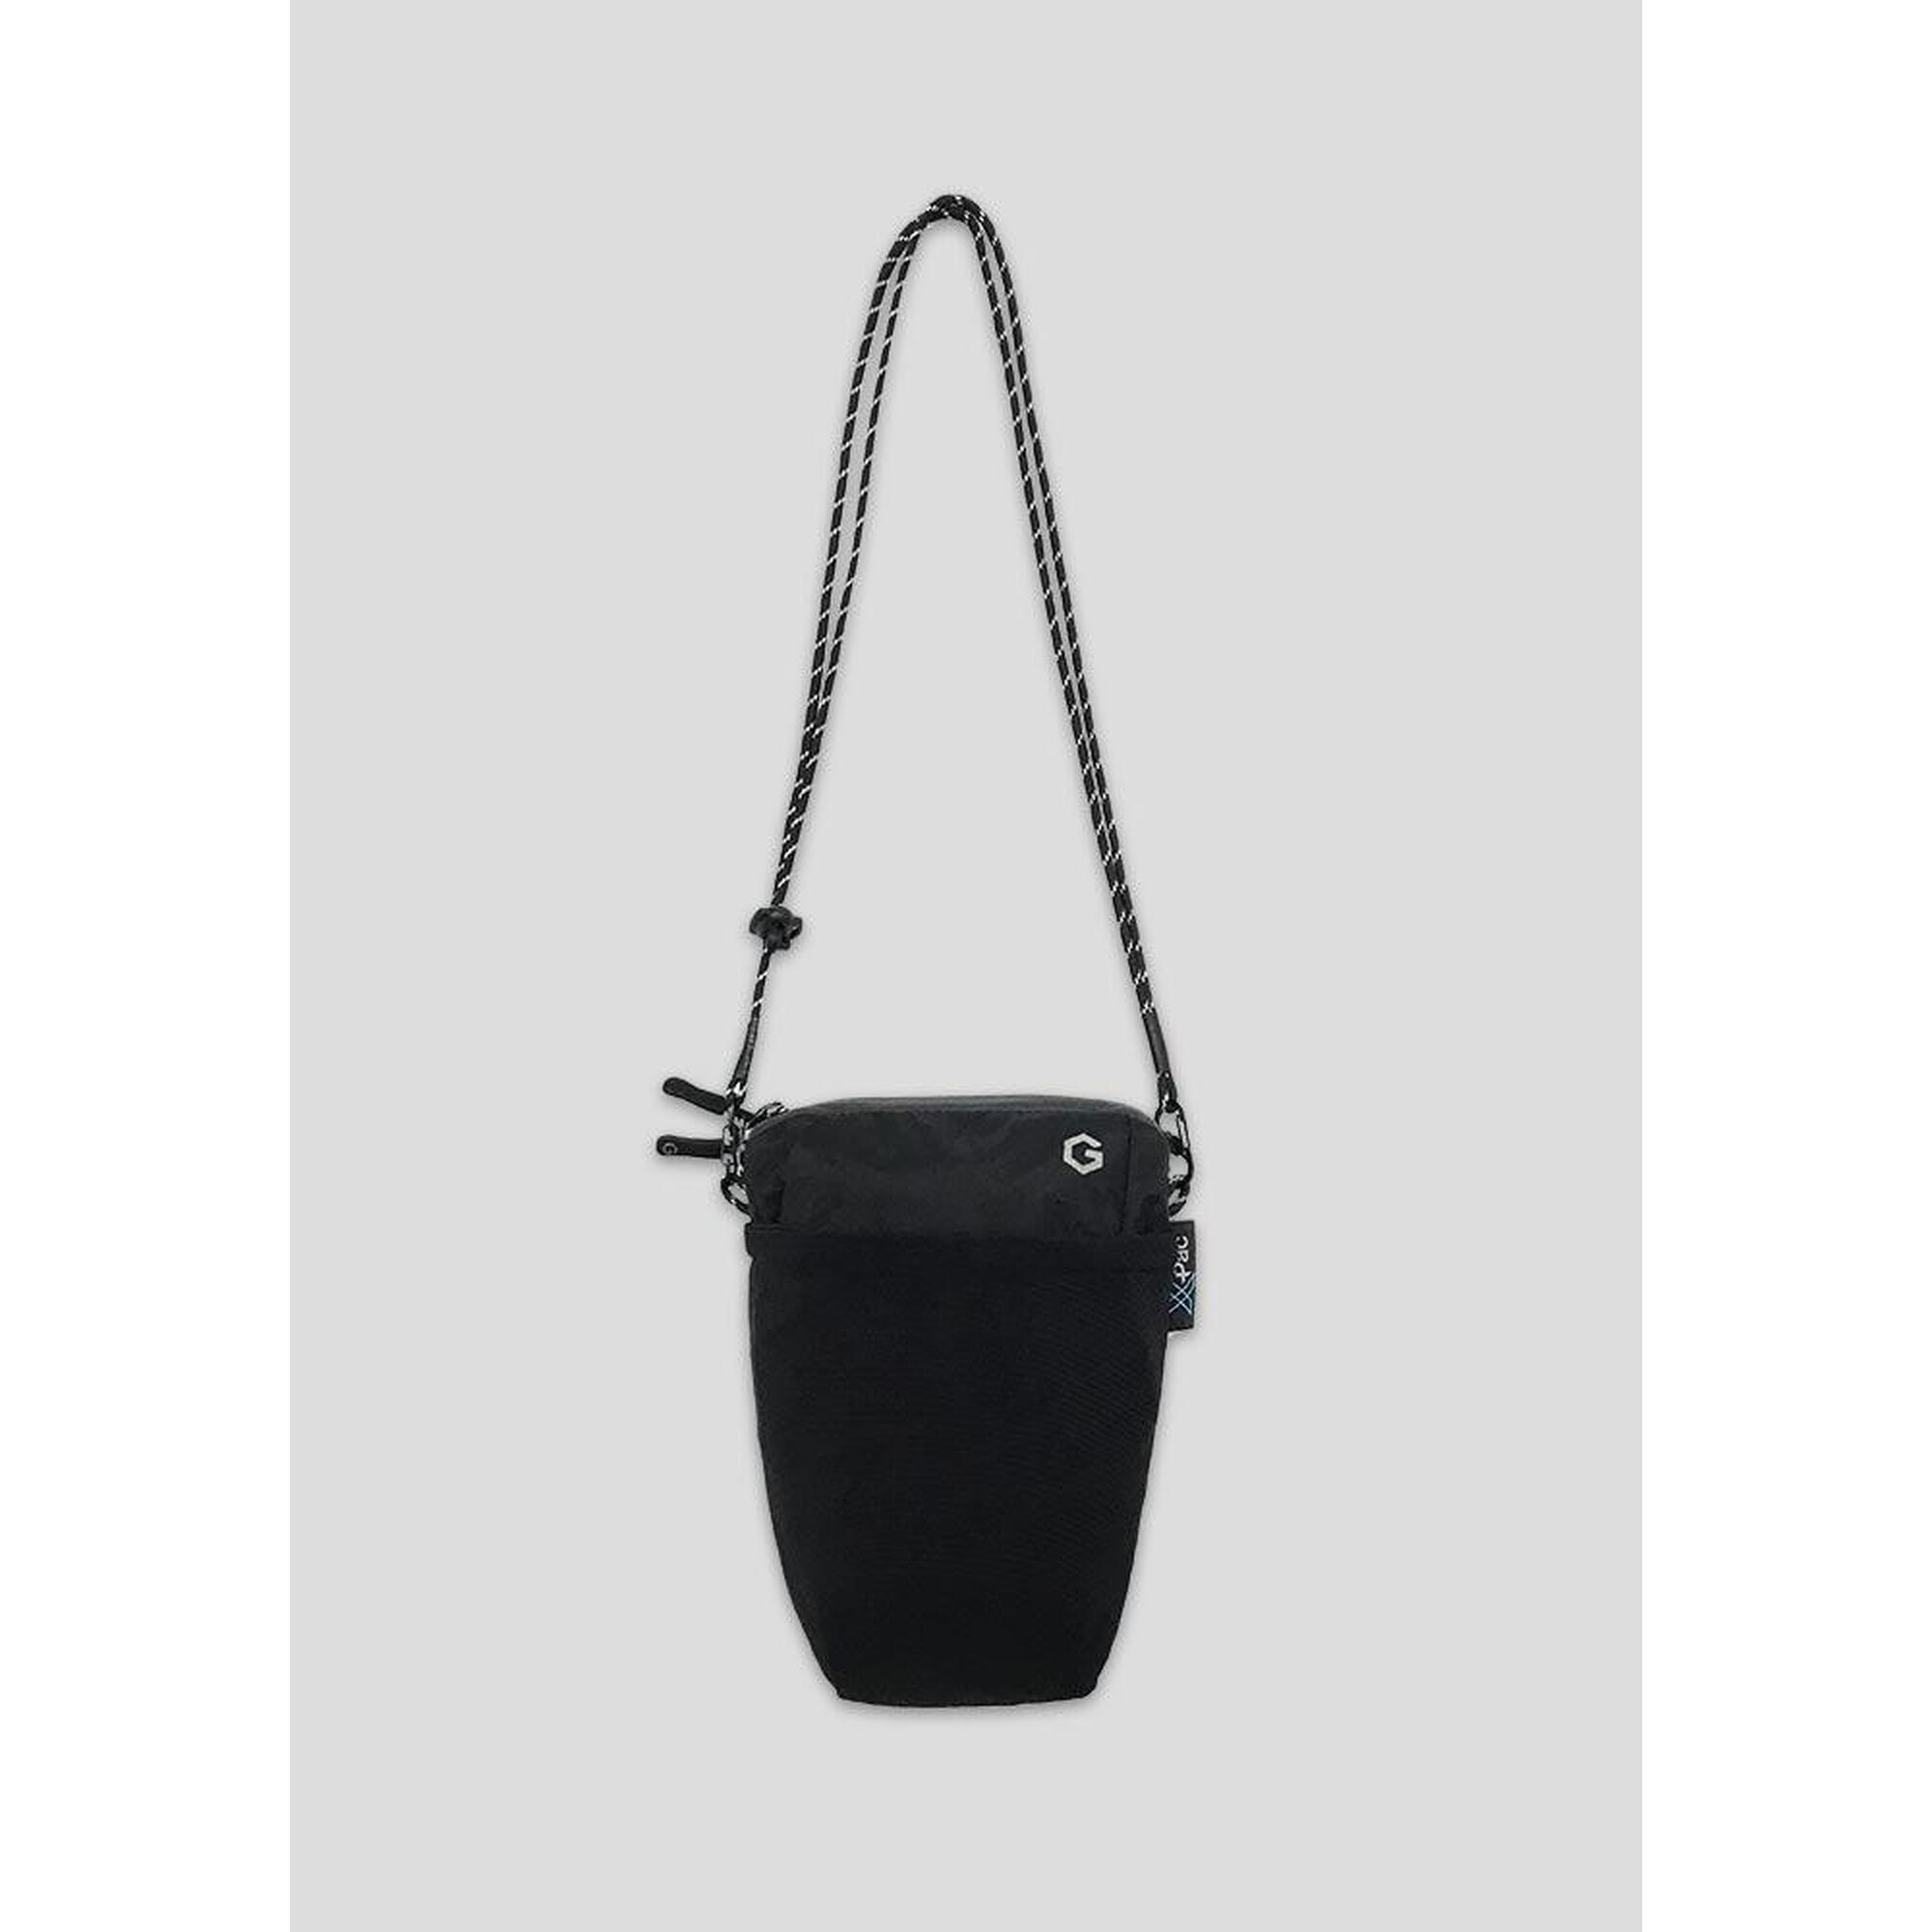 HEXA.GO Ultra Light Saddle Bag - Black (Compatible with Brompton)